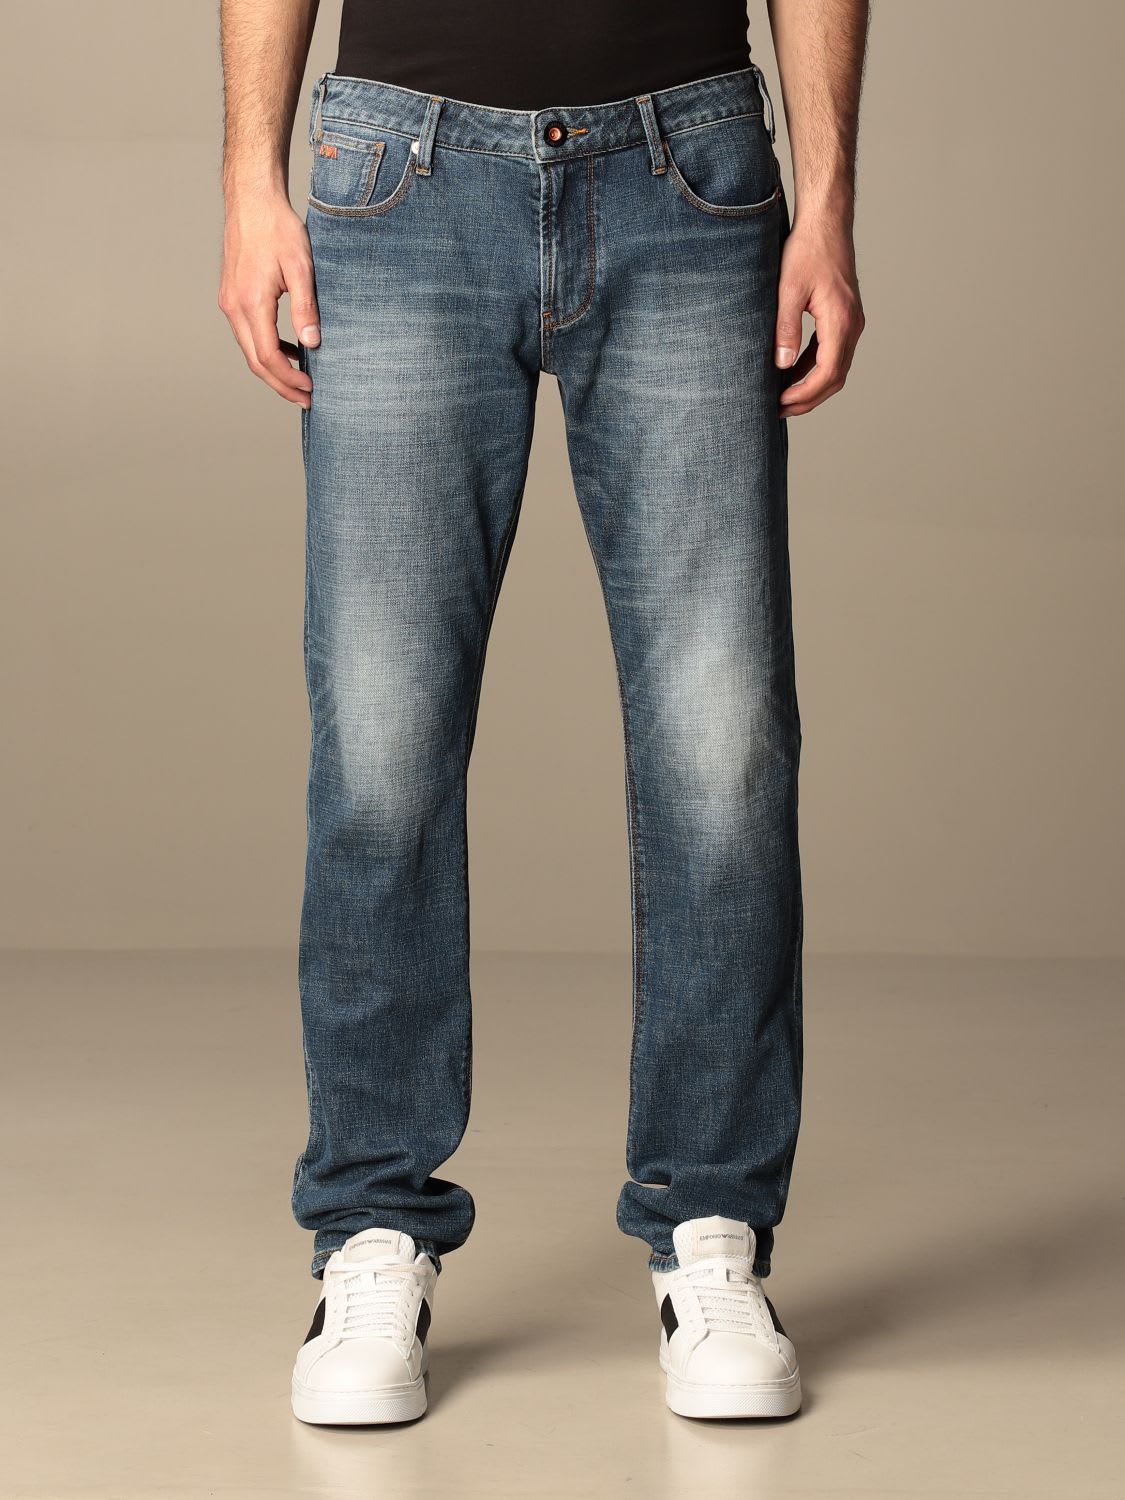 Emporio Armani Jeans Emporio Armani Jeans In Used Stretch Denim